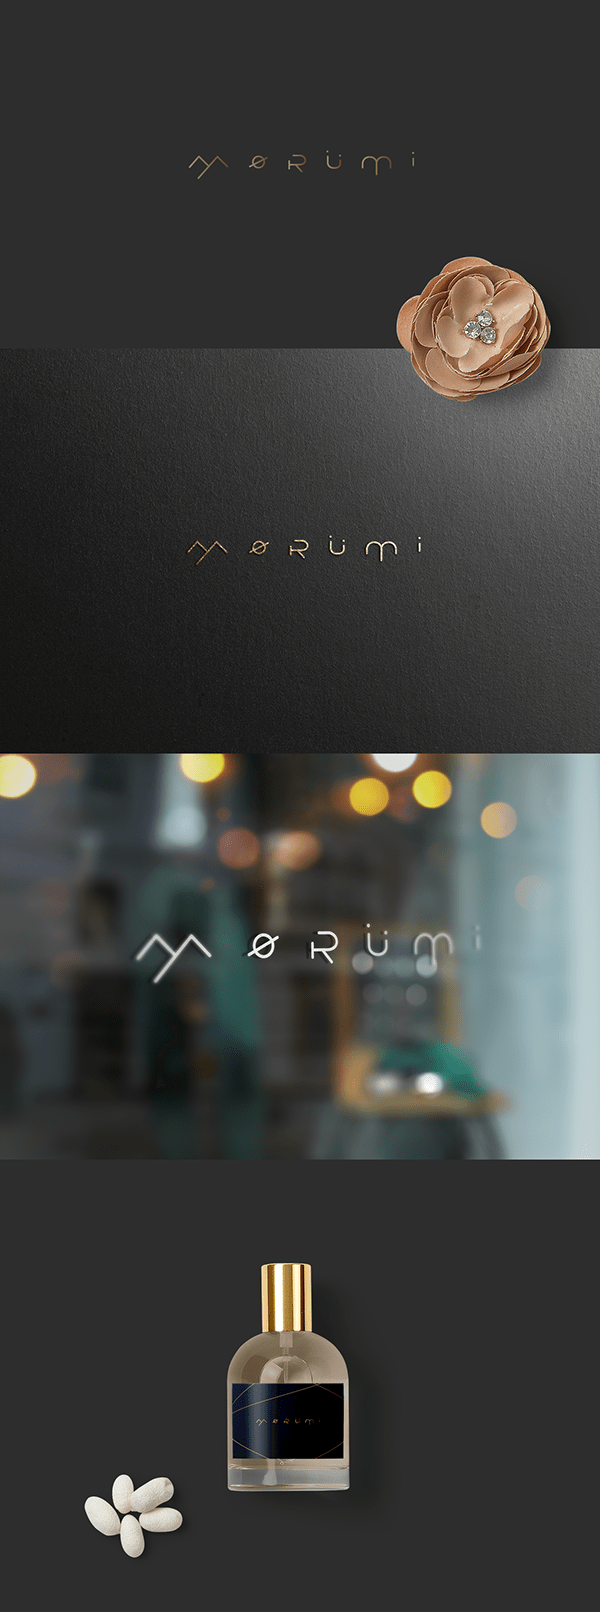 Luxury Beauty Brand Logo for Morumi on Behance